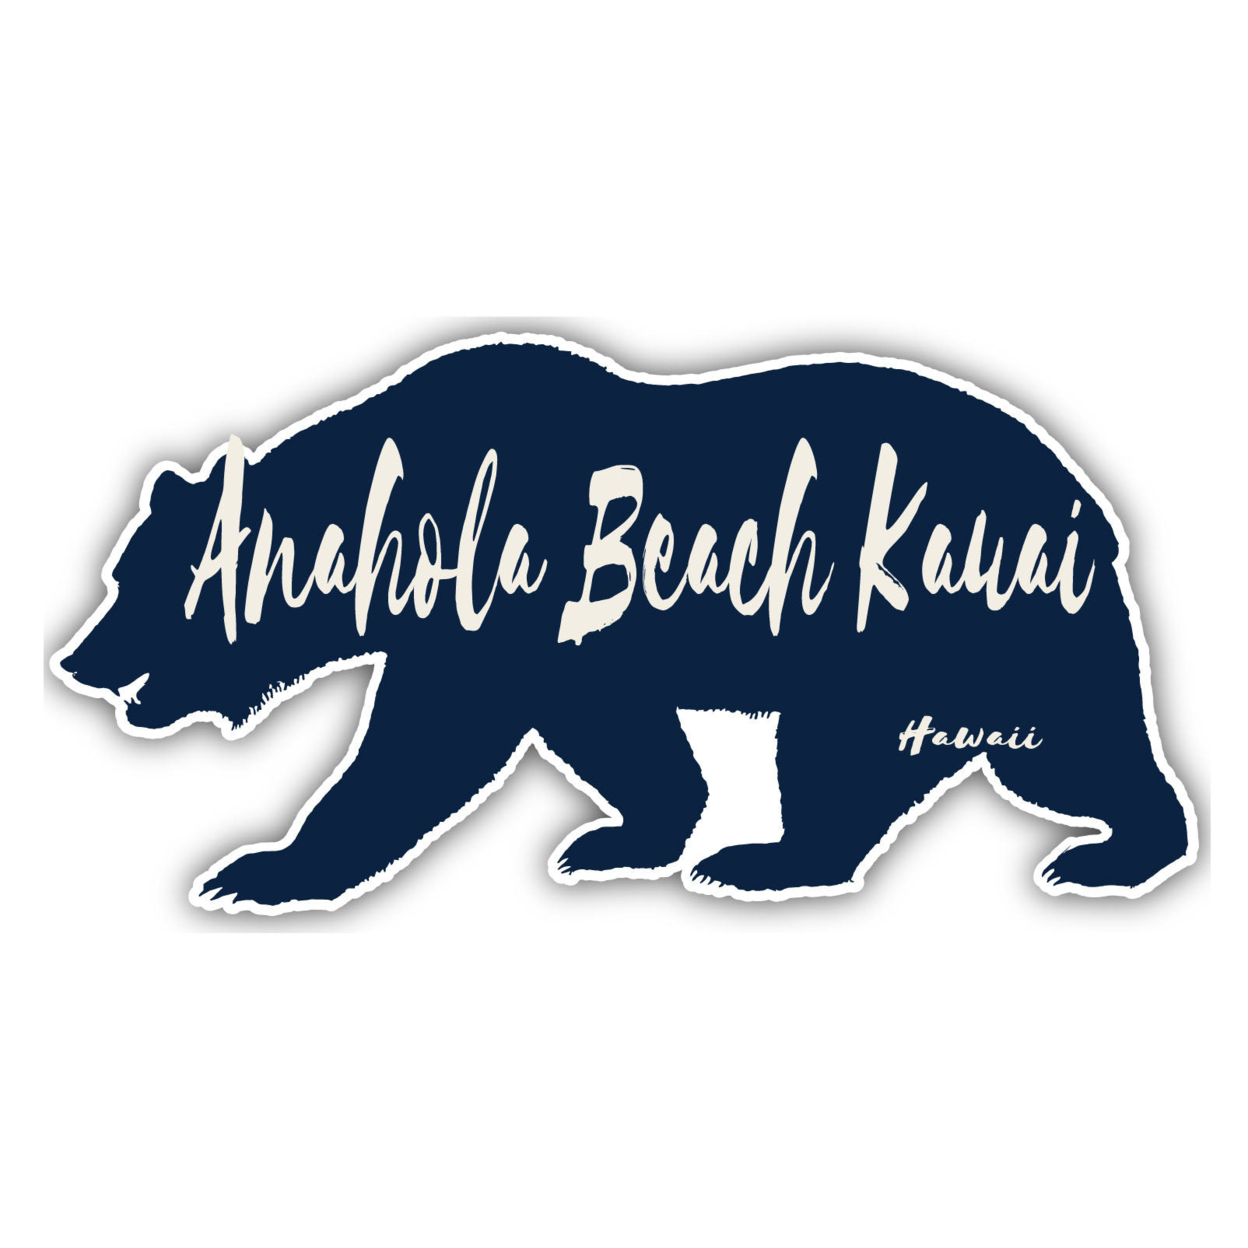 Anahola Beach Kauai Hawaii Souvenir Decorative Stickers (Choose Theme And Size) - 4-Pack, 8-Inch, Bear